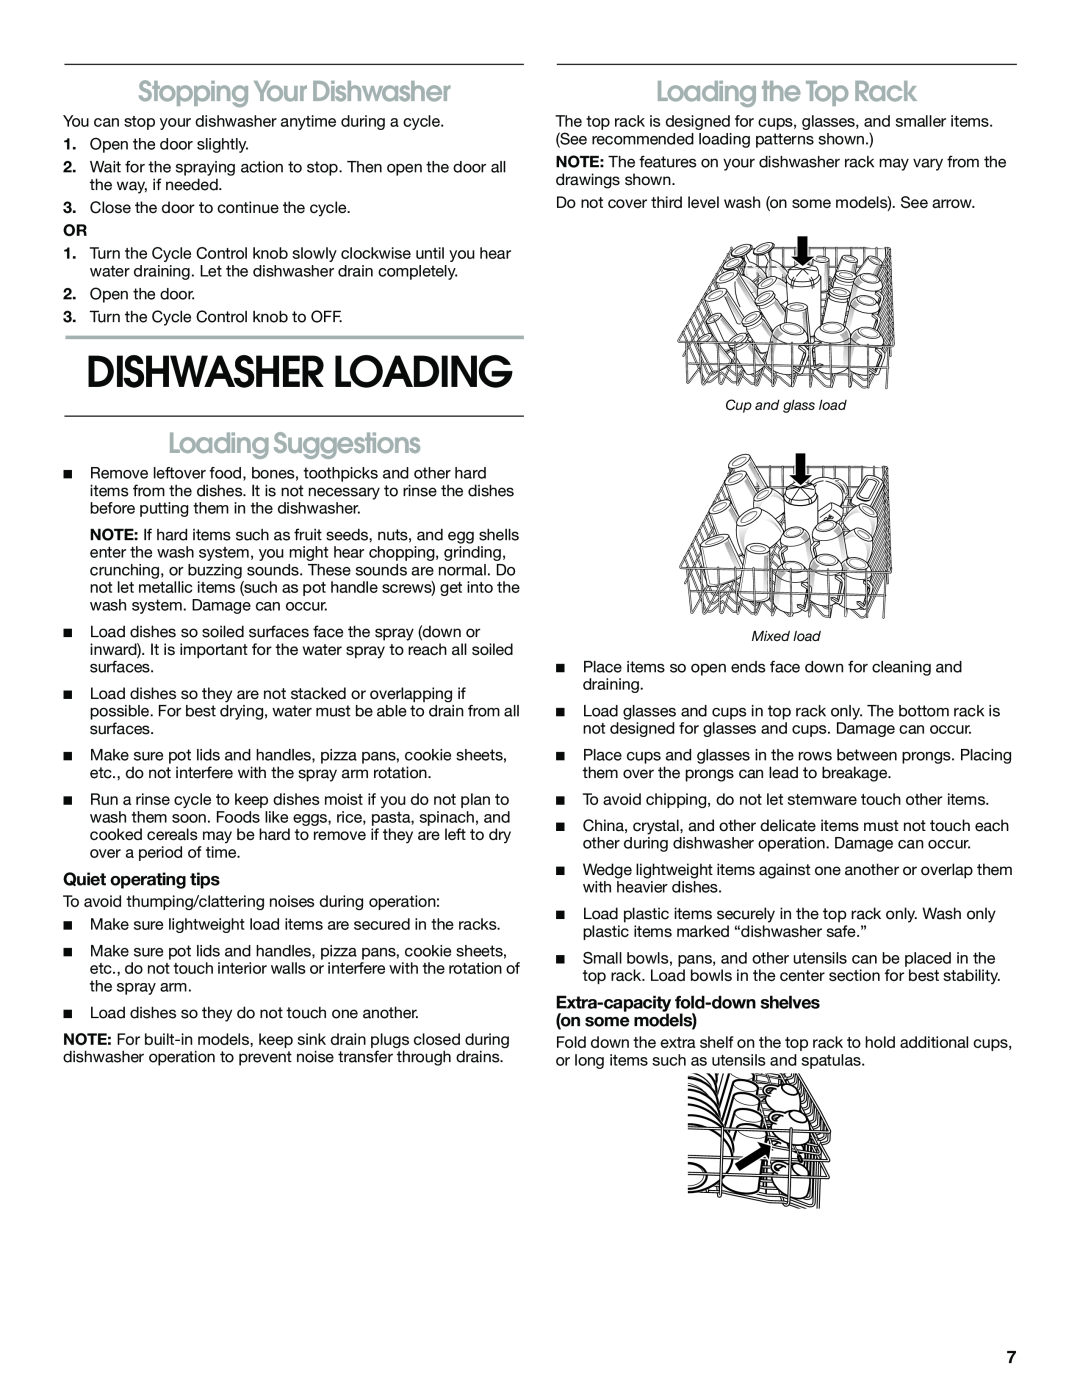 Whirlpool UNDERCOUNTER, TUD5700 Dishwasher Loading, Stopping Your Dishwasher, Loading Suggestions, Loading the Top Rack 